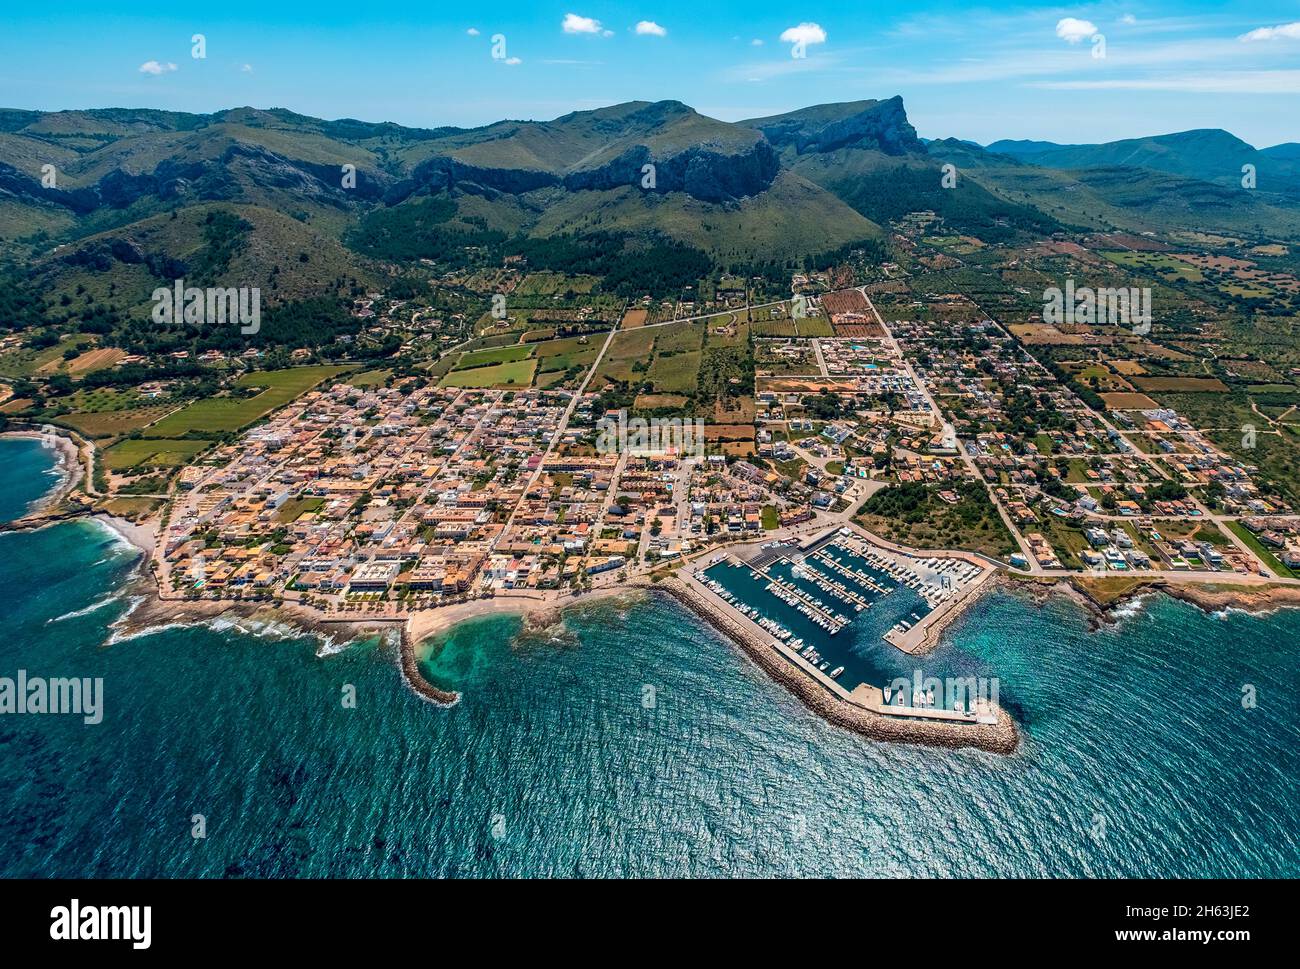 Luftaufnahme, Yachthafen und Club nautico colonia san pedro, Blick auf die Stadt colonia de sant pere, mallorca, balearen, spanien Stockfoto